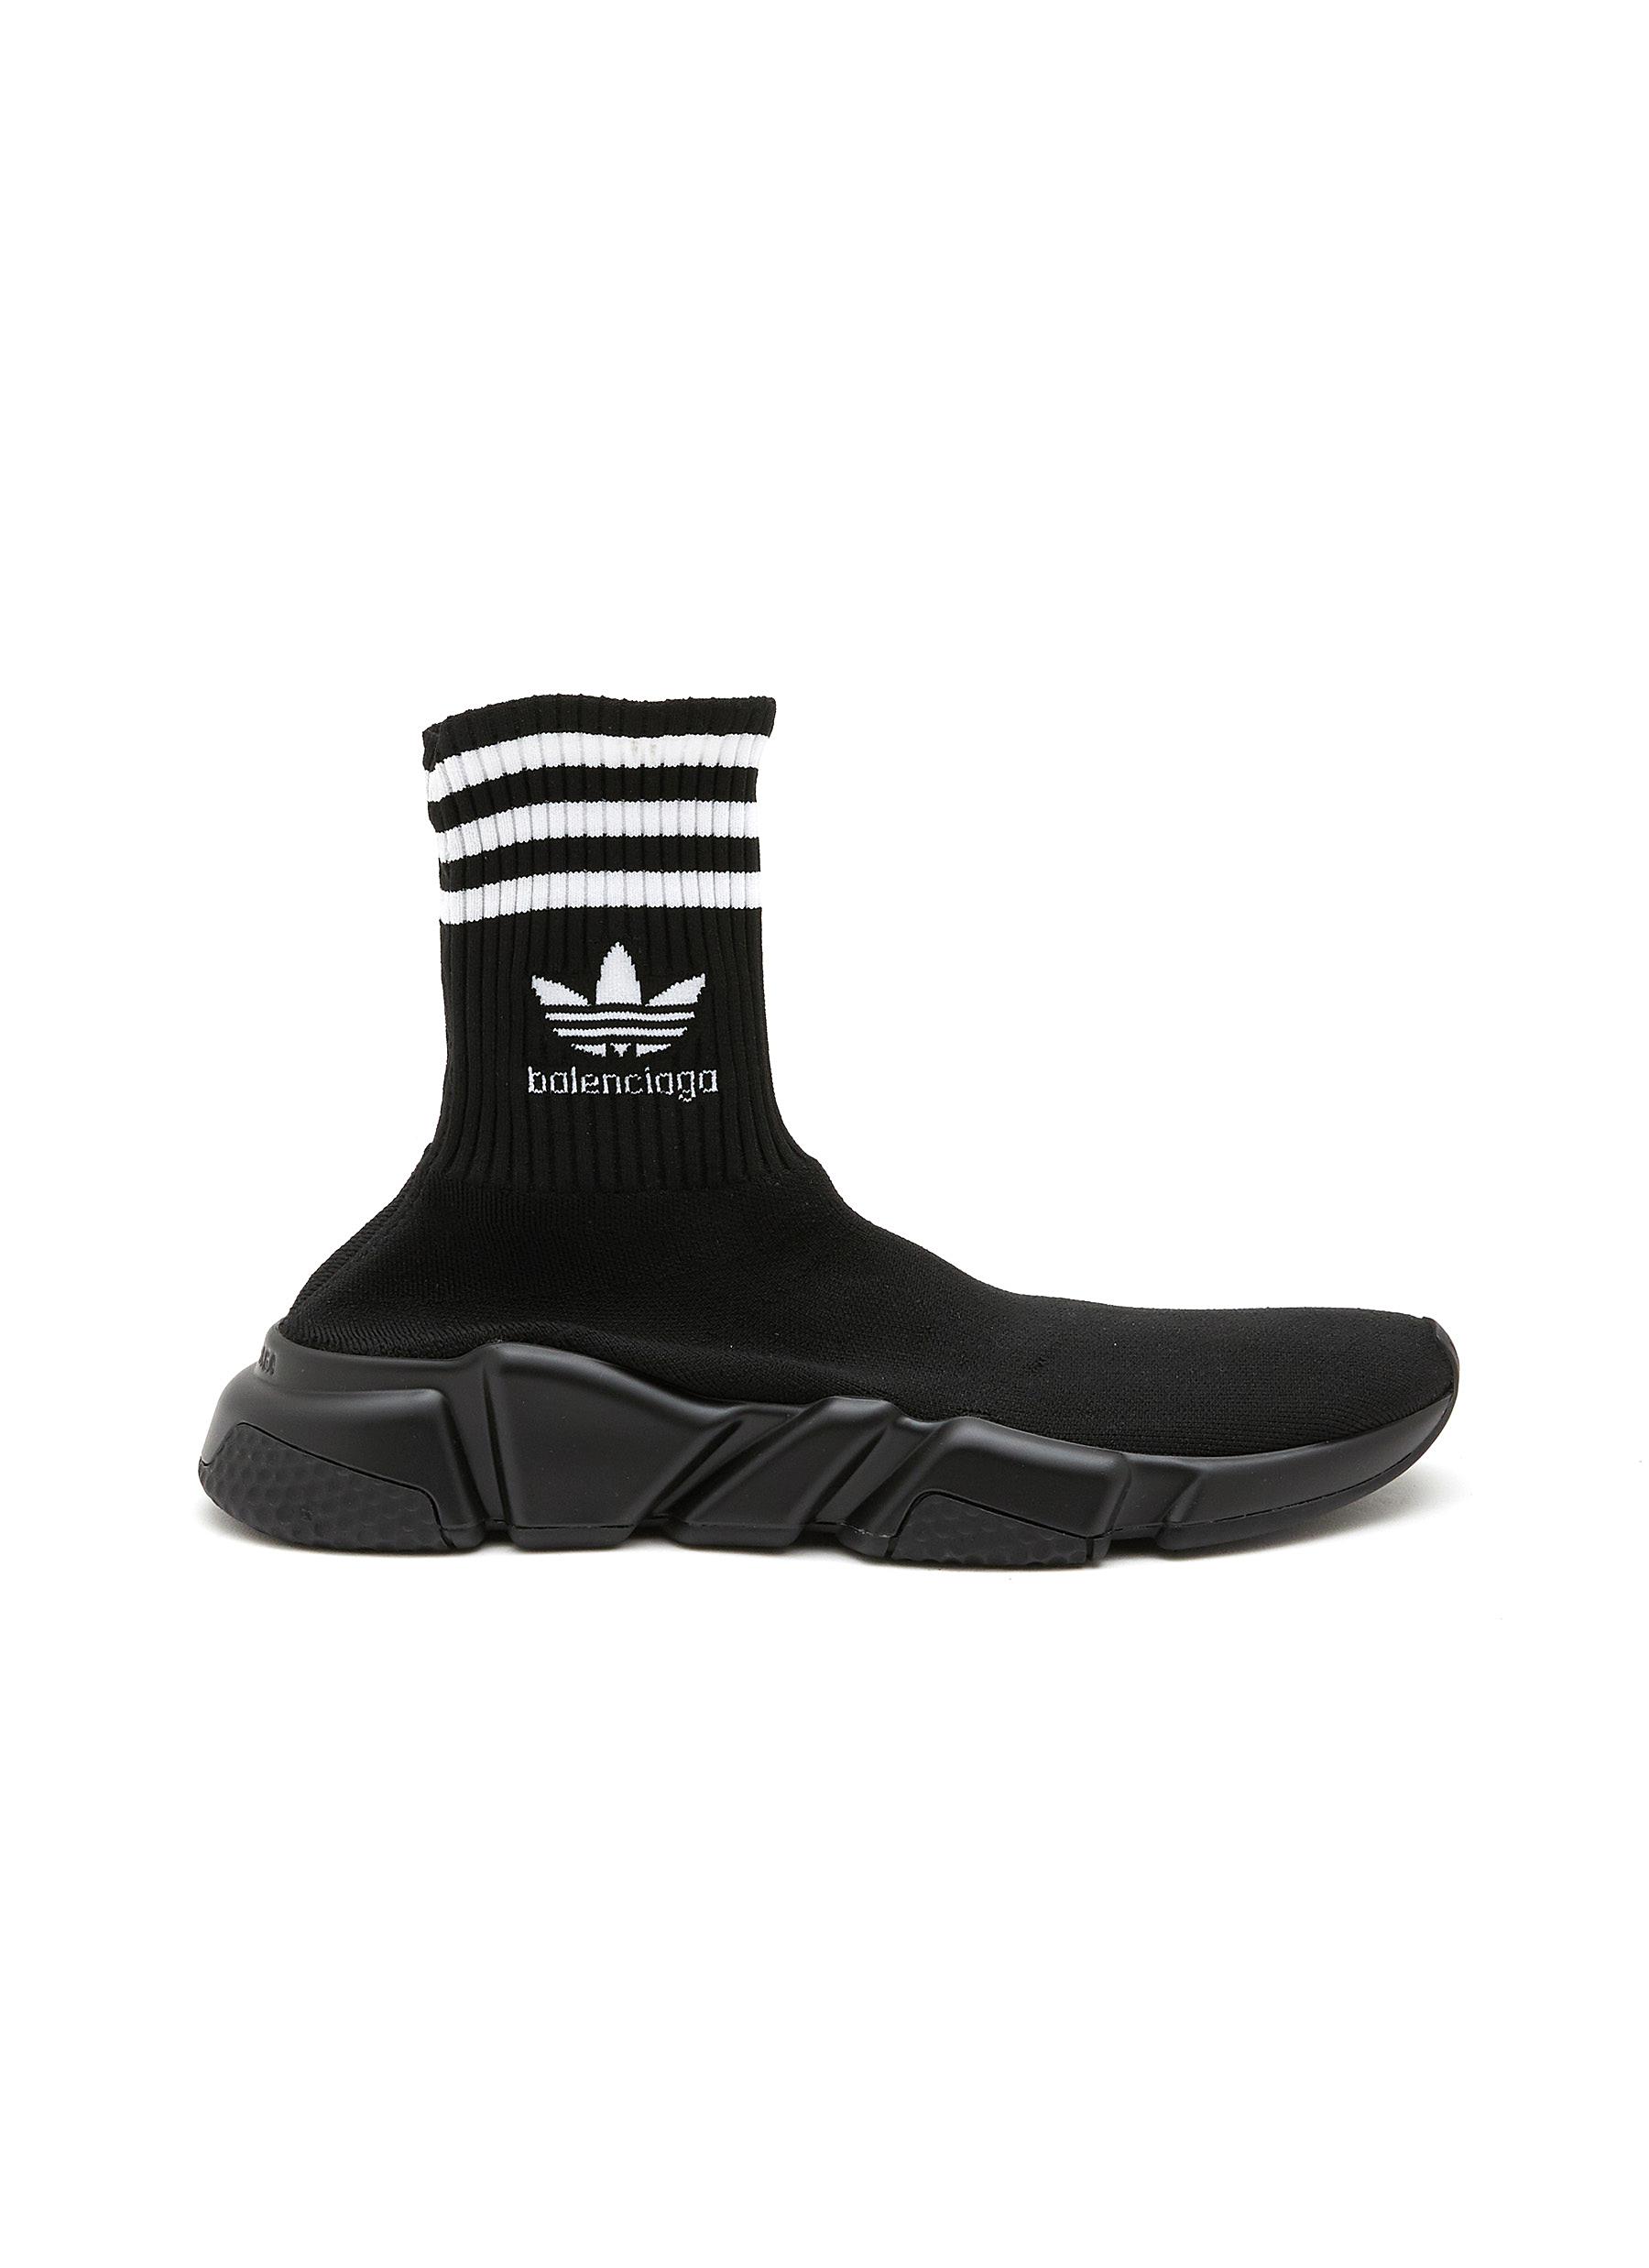 X Adidas ‘Speed' High Top Sock Sneakers